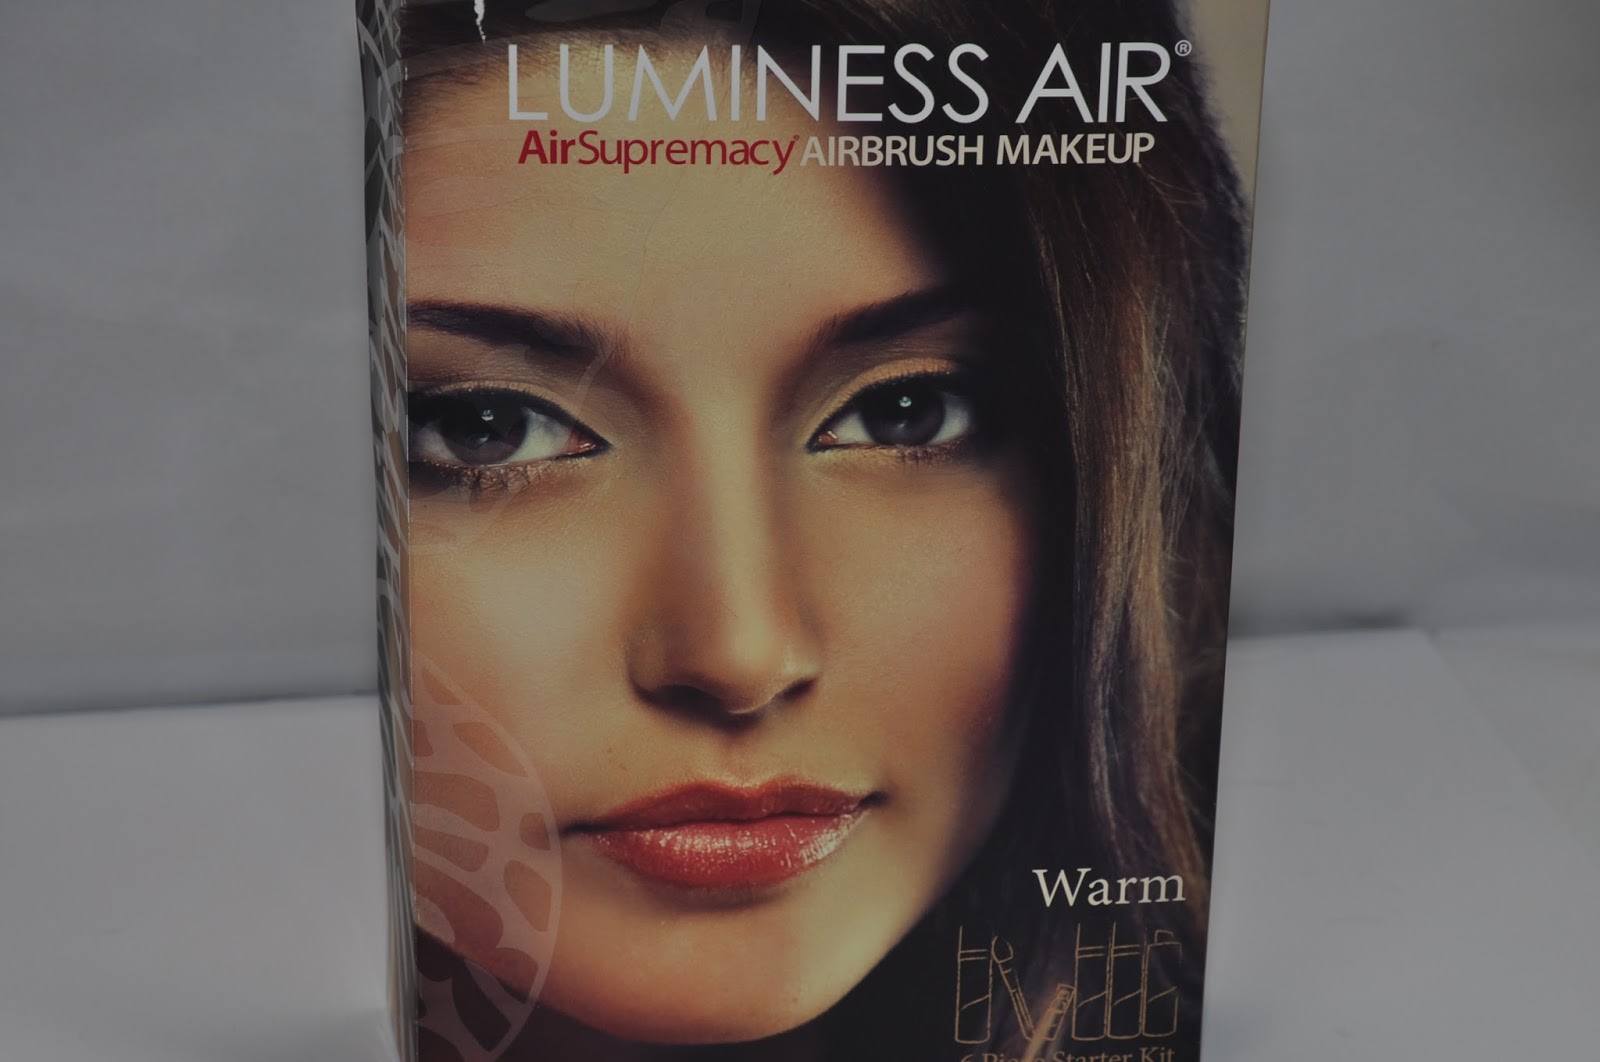 Luminess Air AirSupremacy Compressor-Free Airbrush Makeup Look and